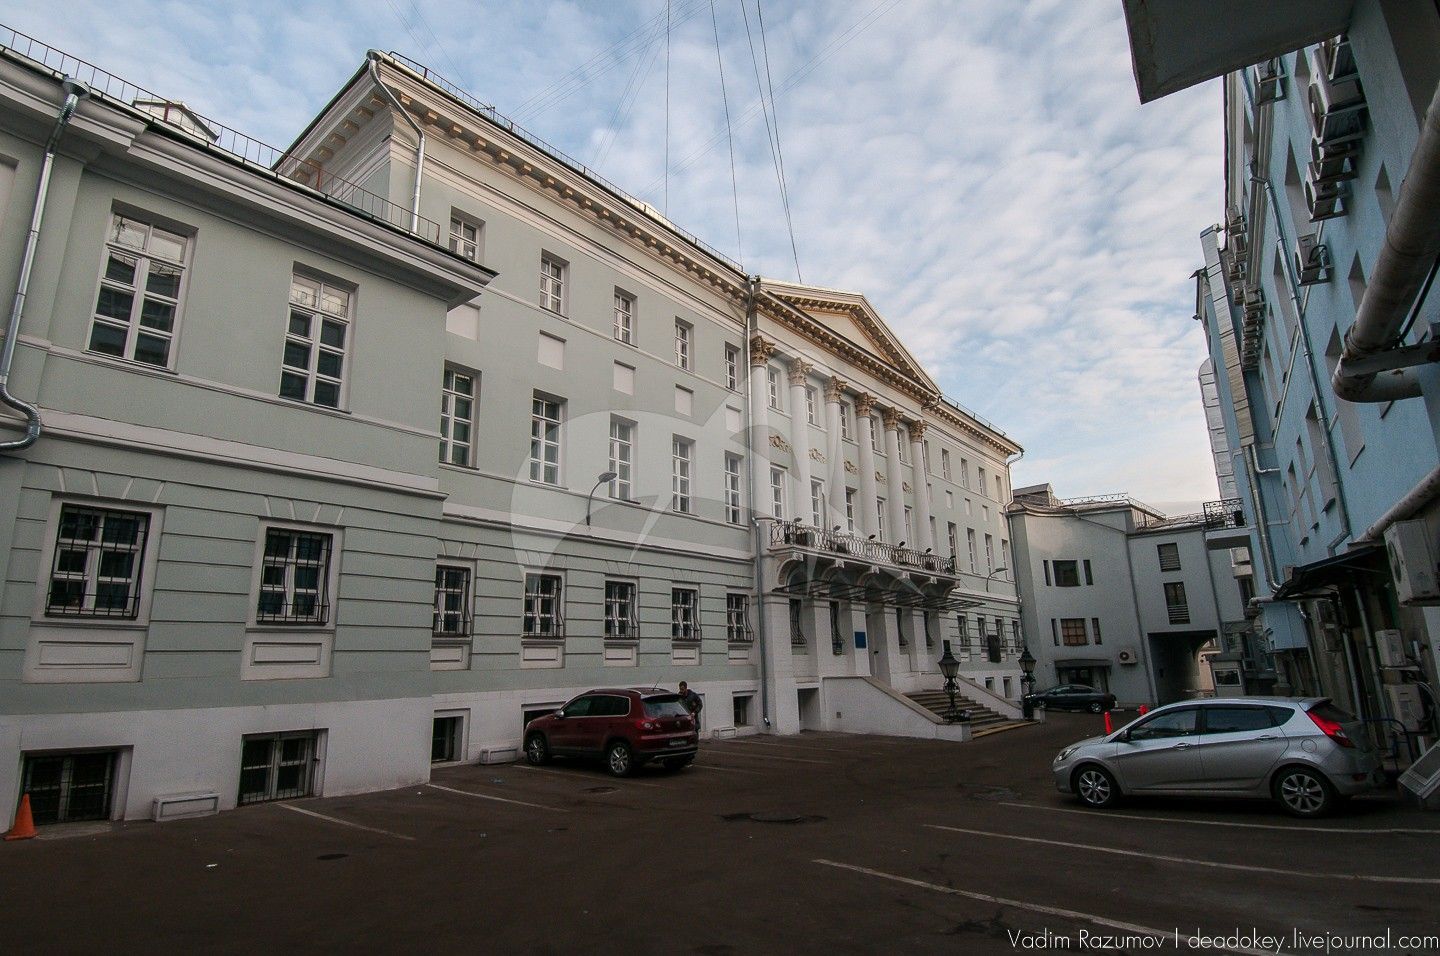 Дом Меншикова, 1778 г., арх. М.Ф. Казаков